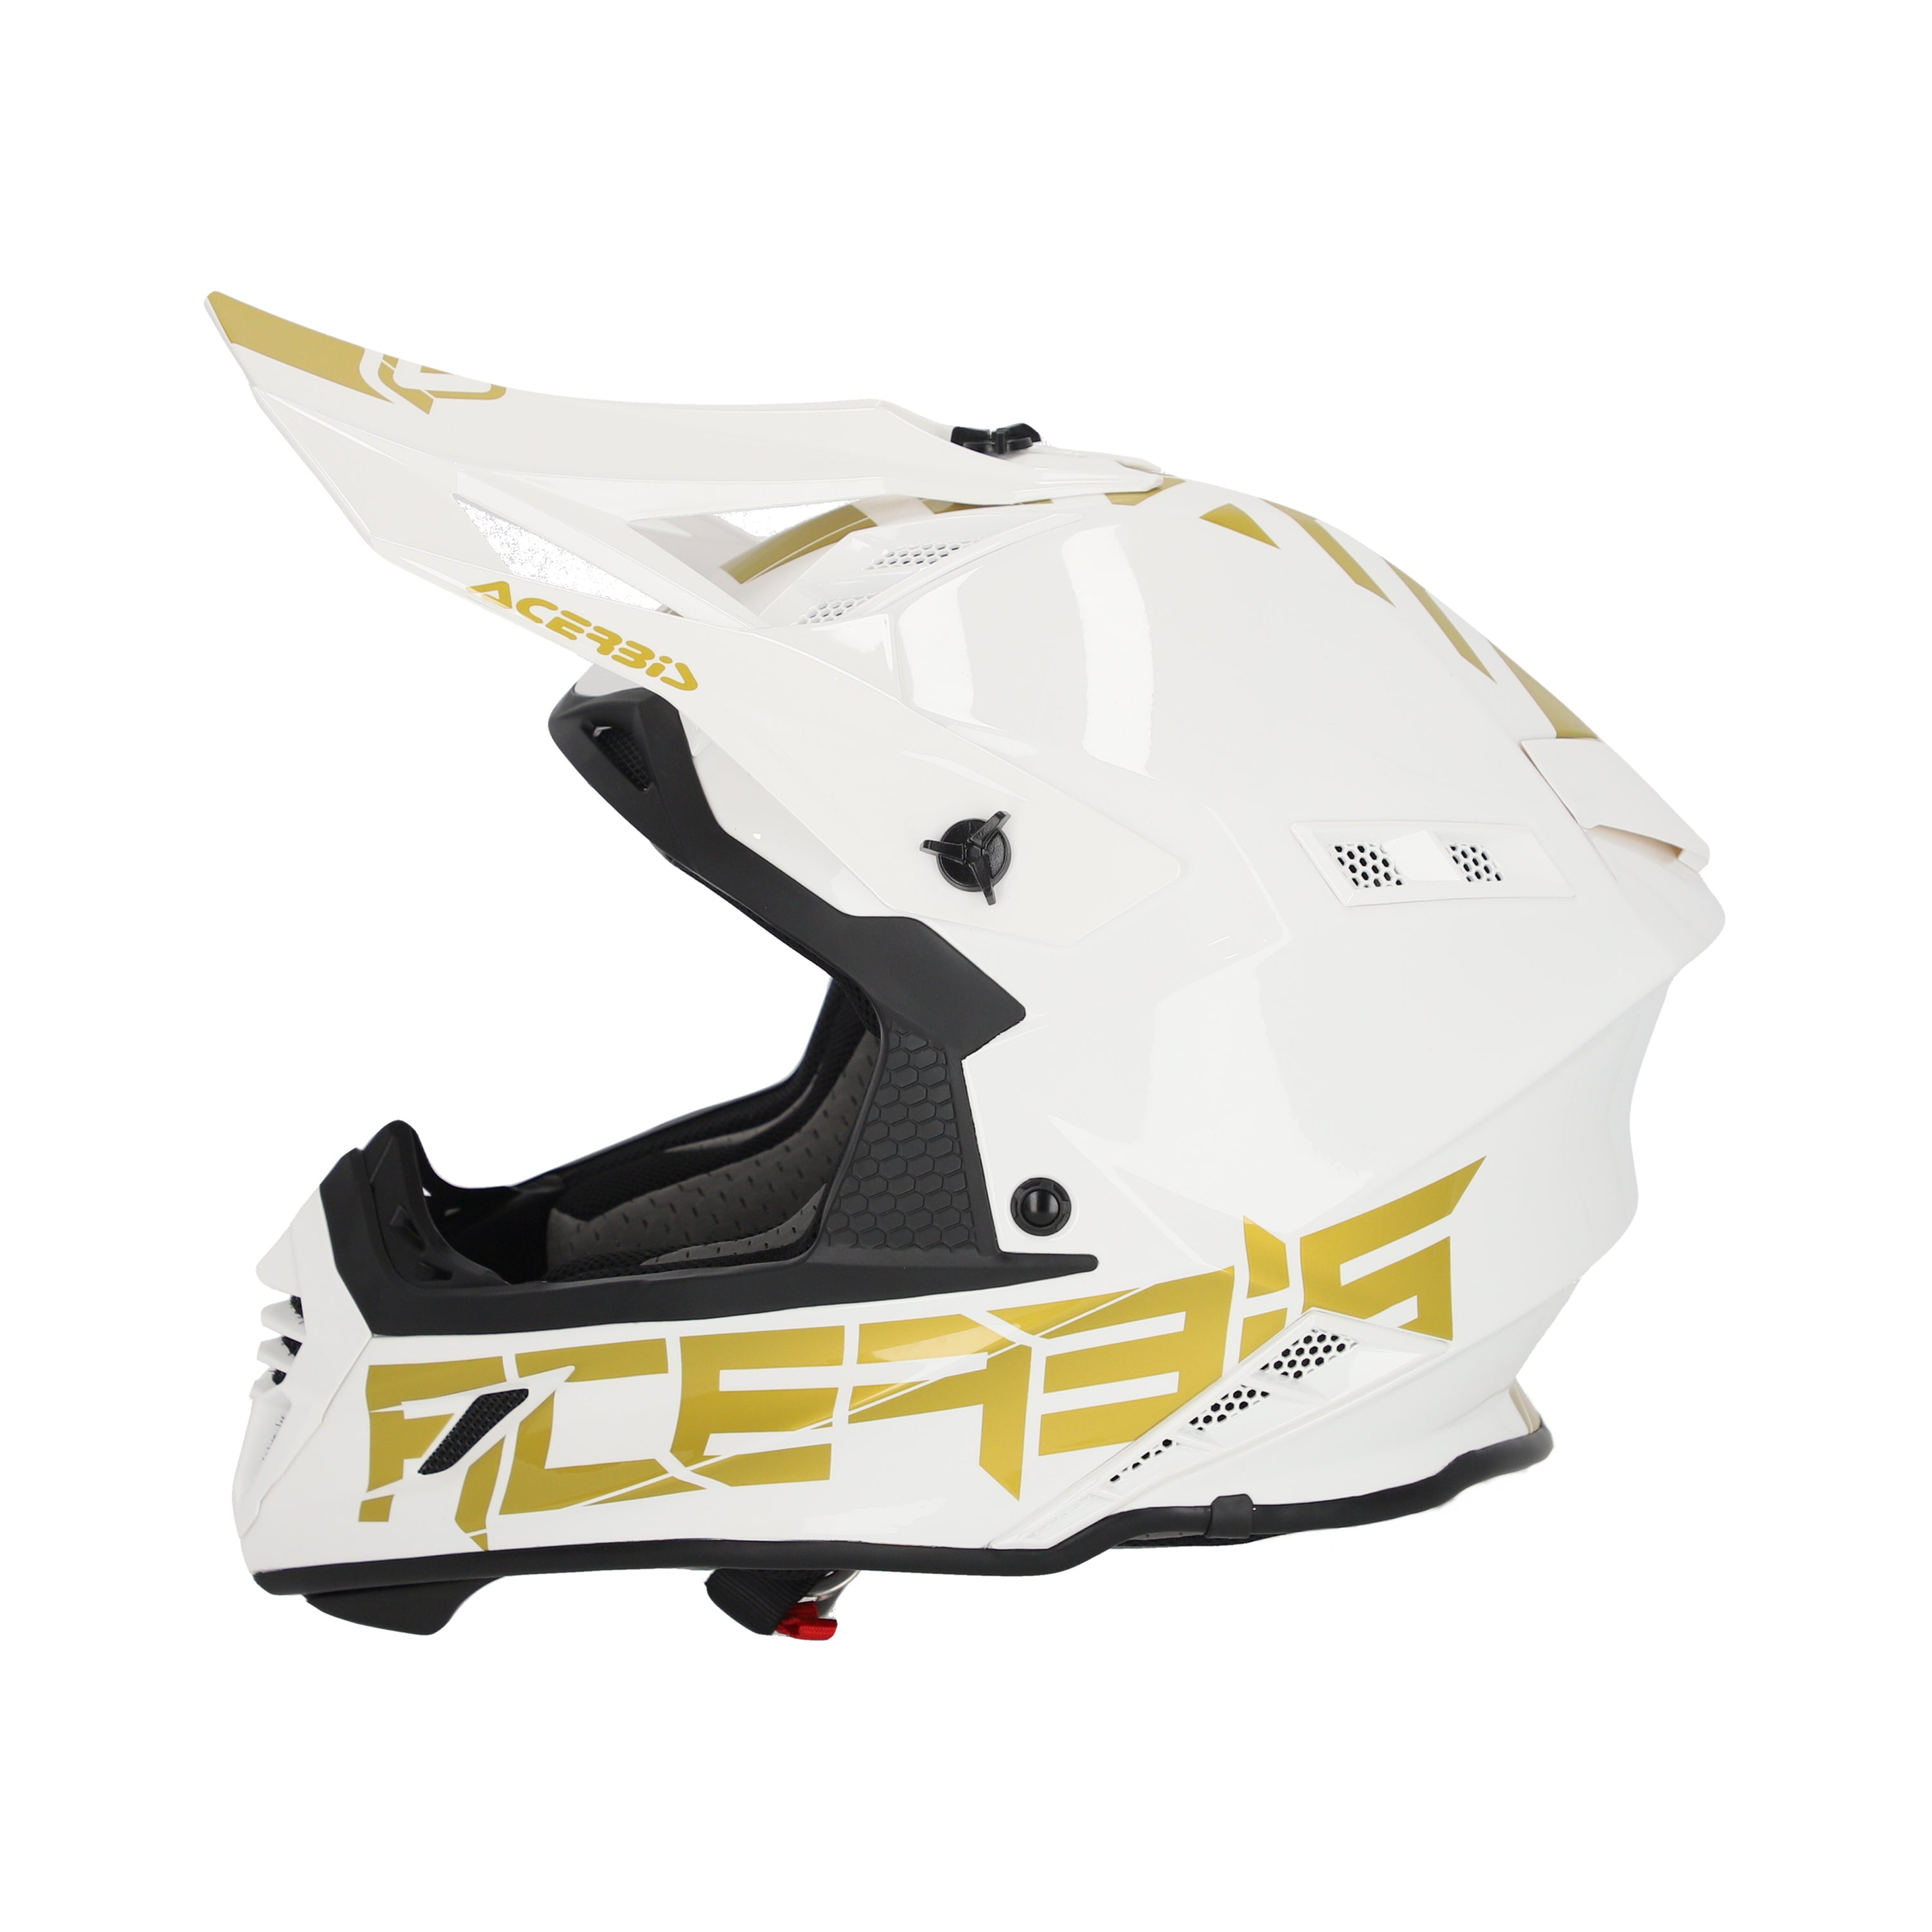 Acerbis X-Track MX Helmet Glossy White/Gold